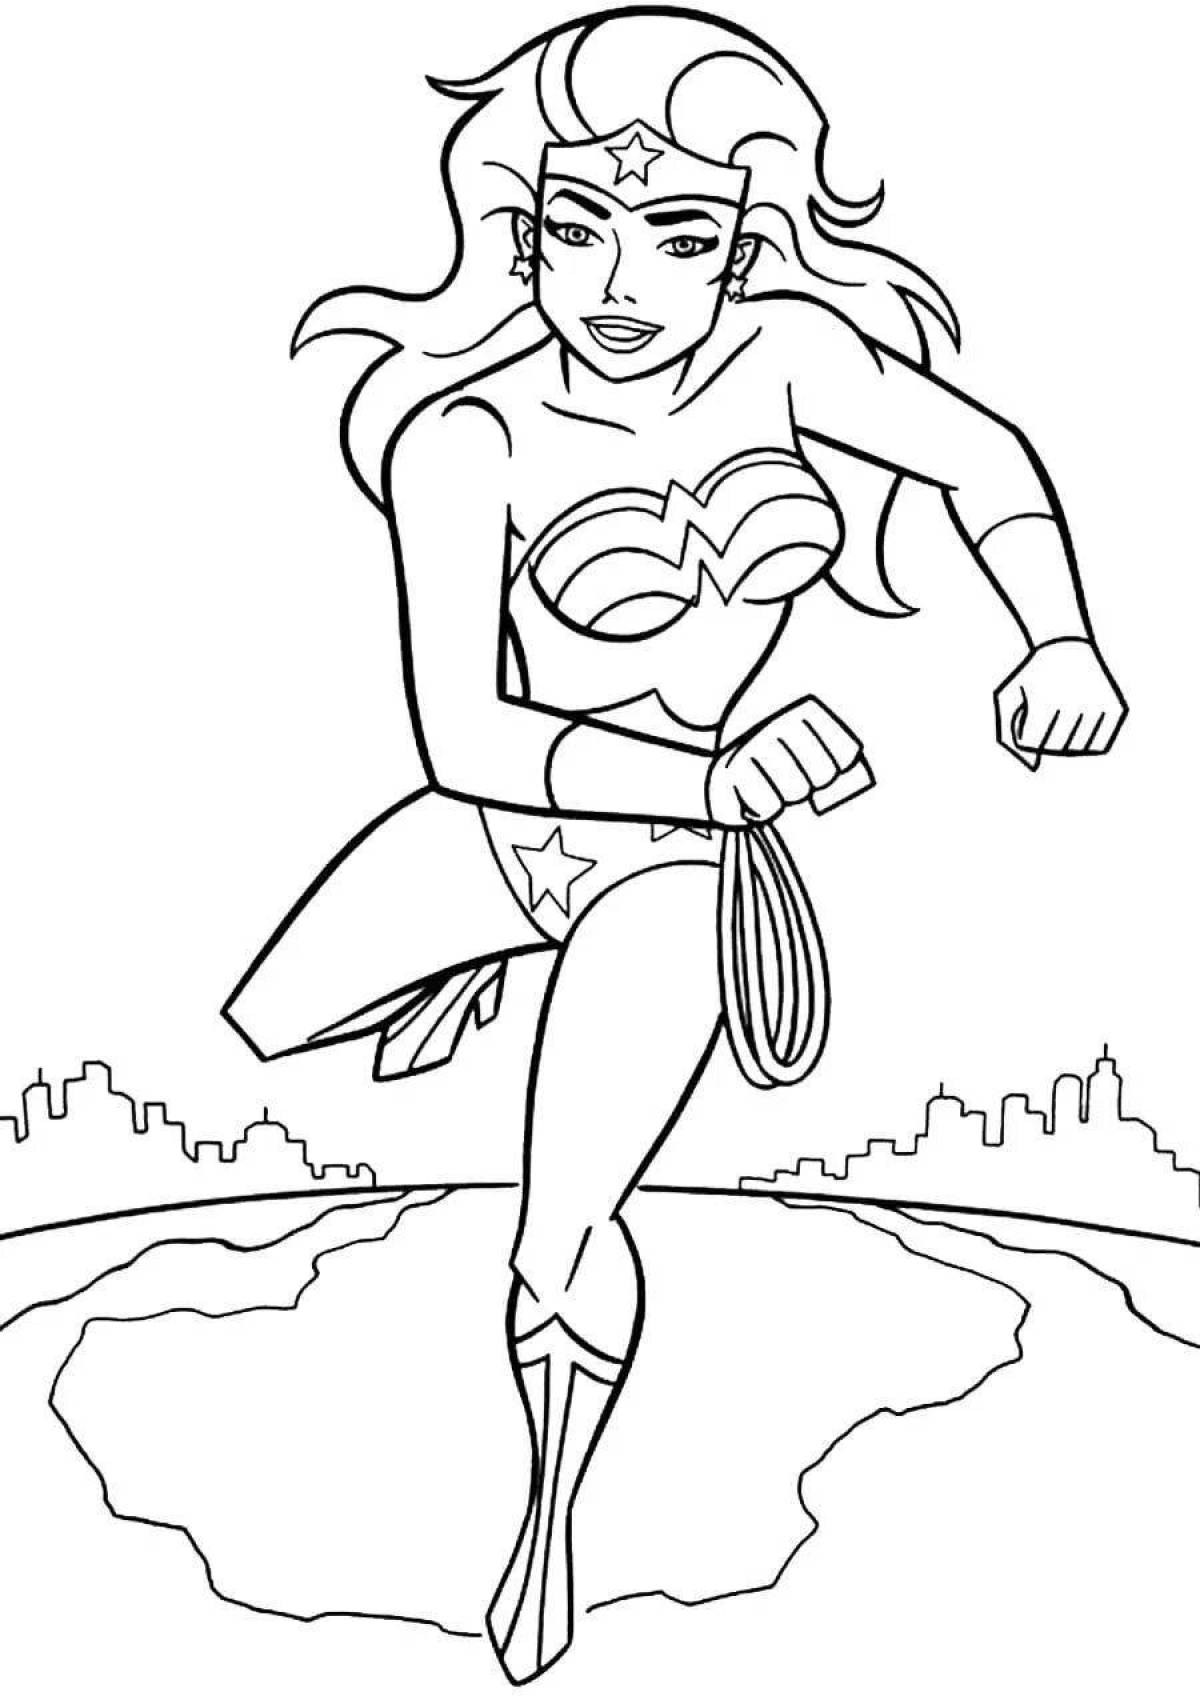 Impressive superwoman coloring page